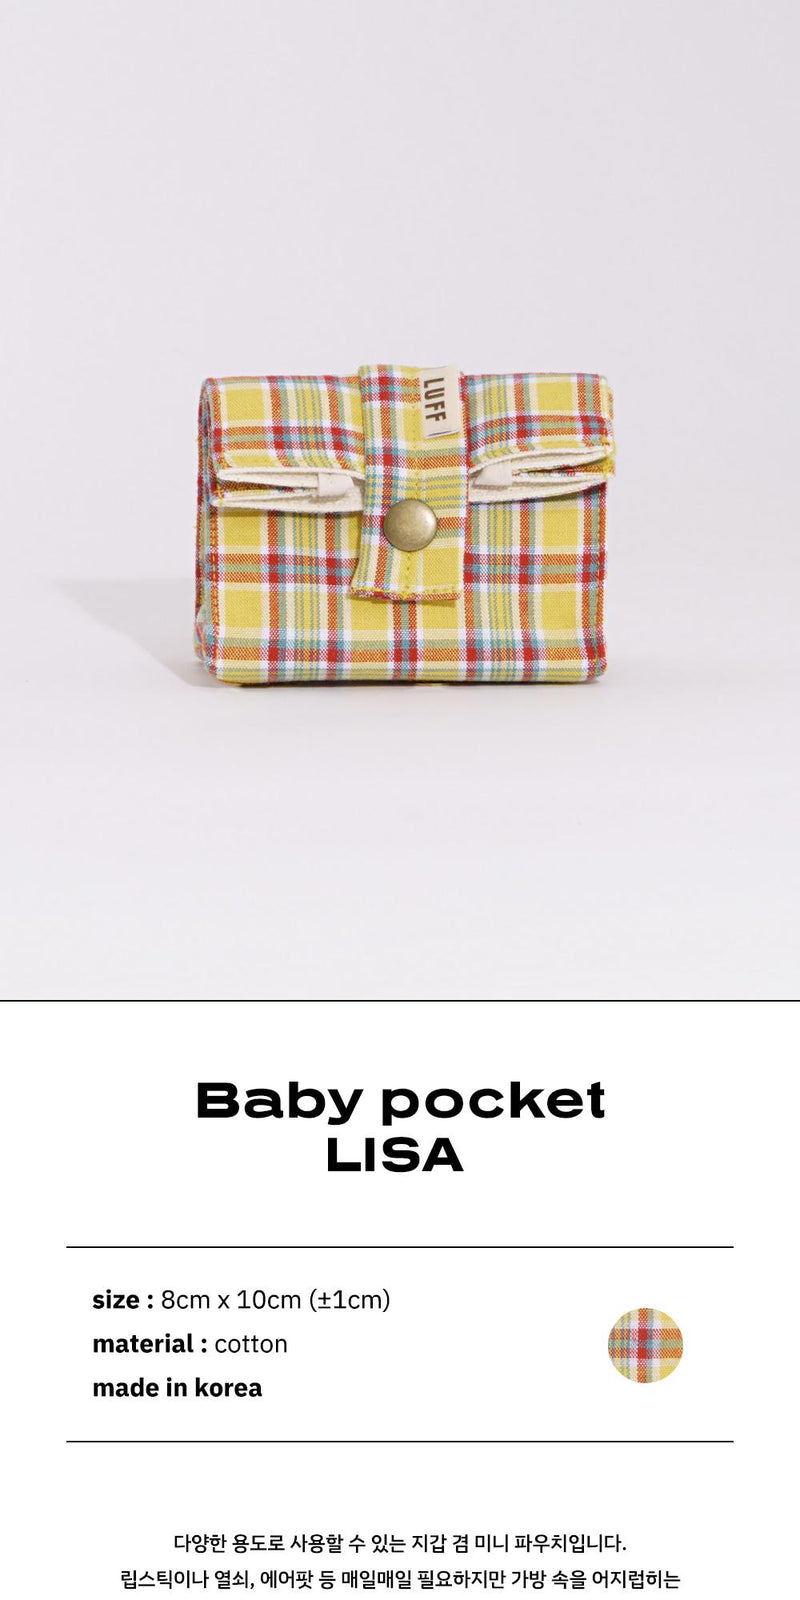 baby pocket - lisa